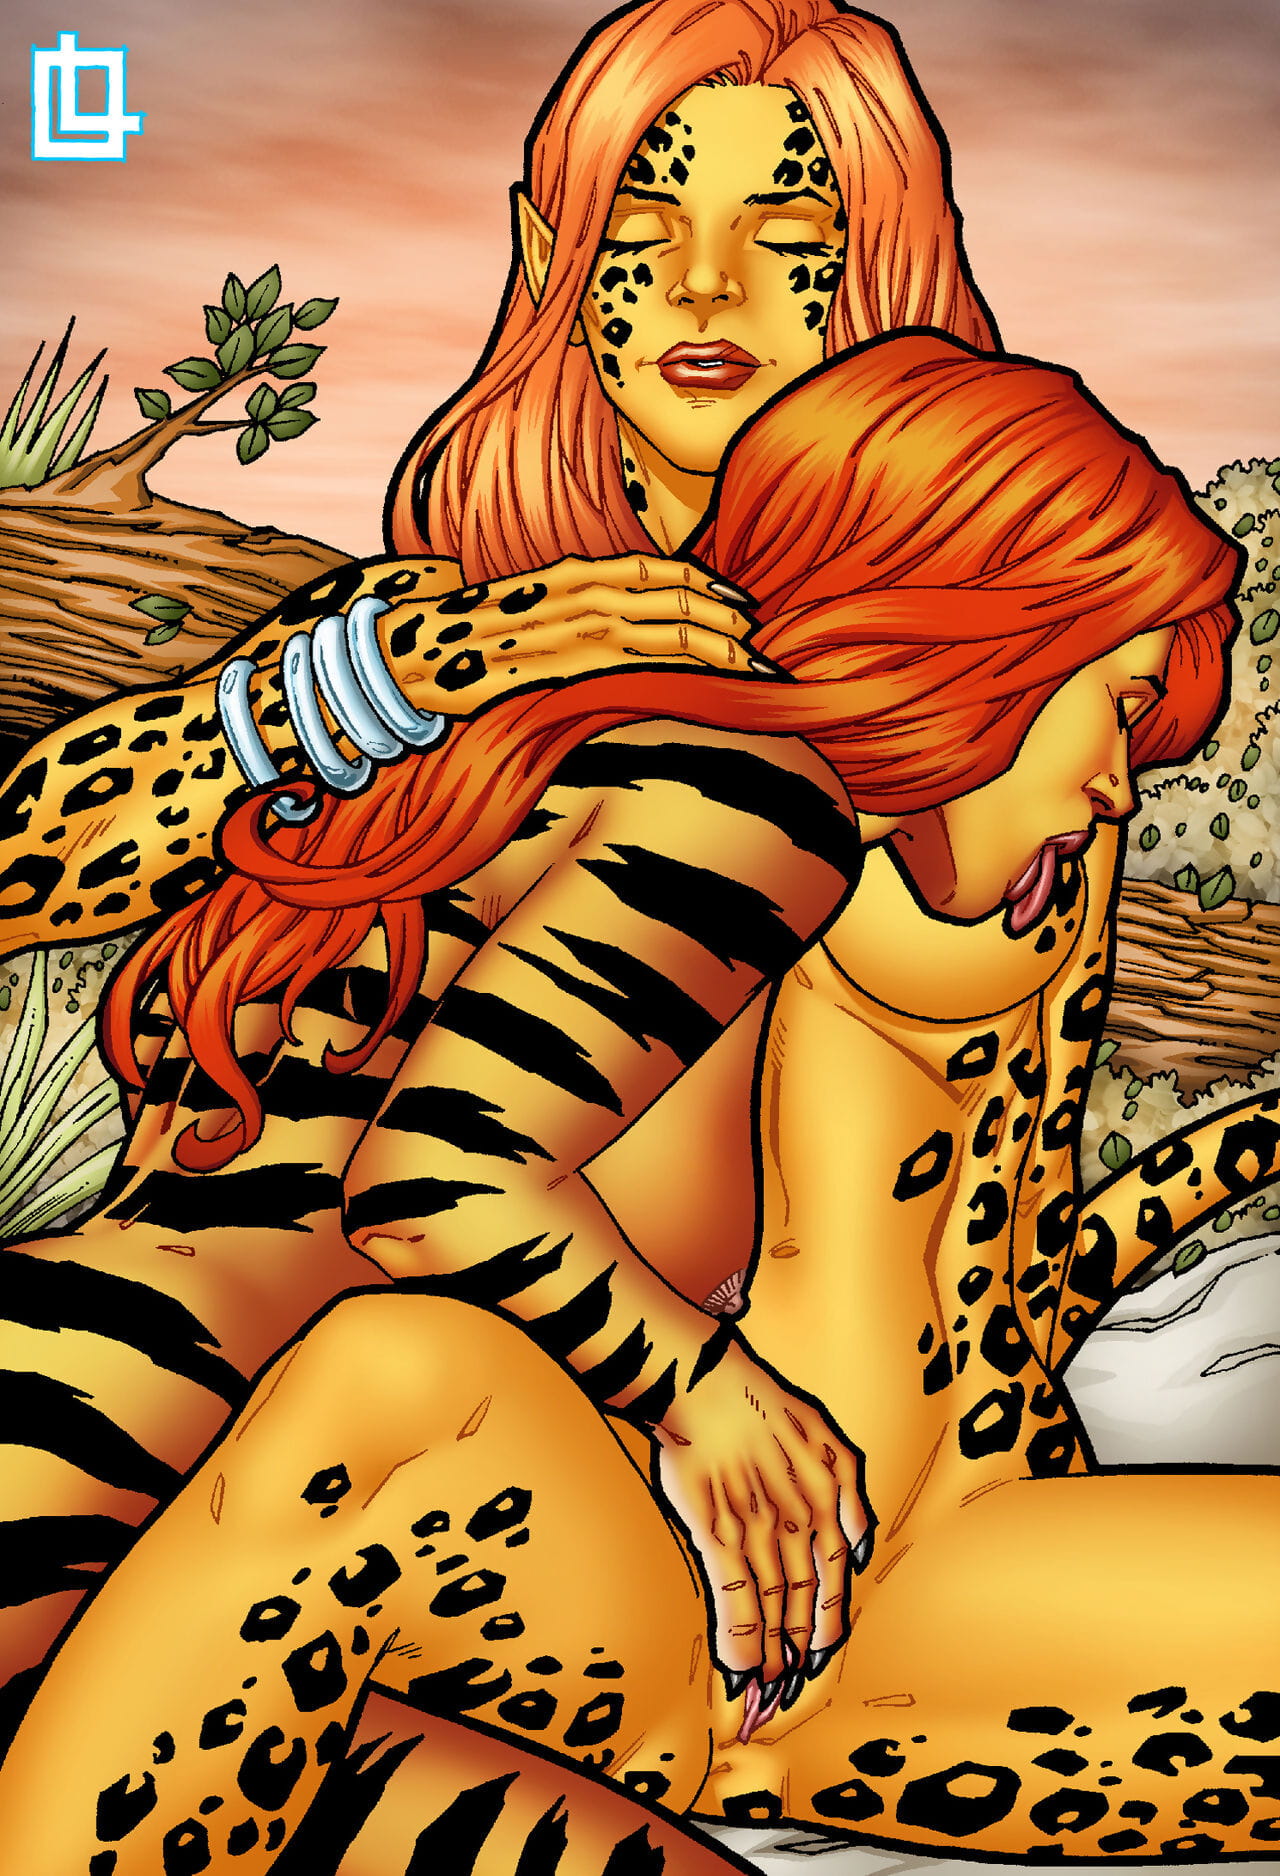 Leandro komiksy tygrysa i gepard page 1